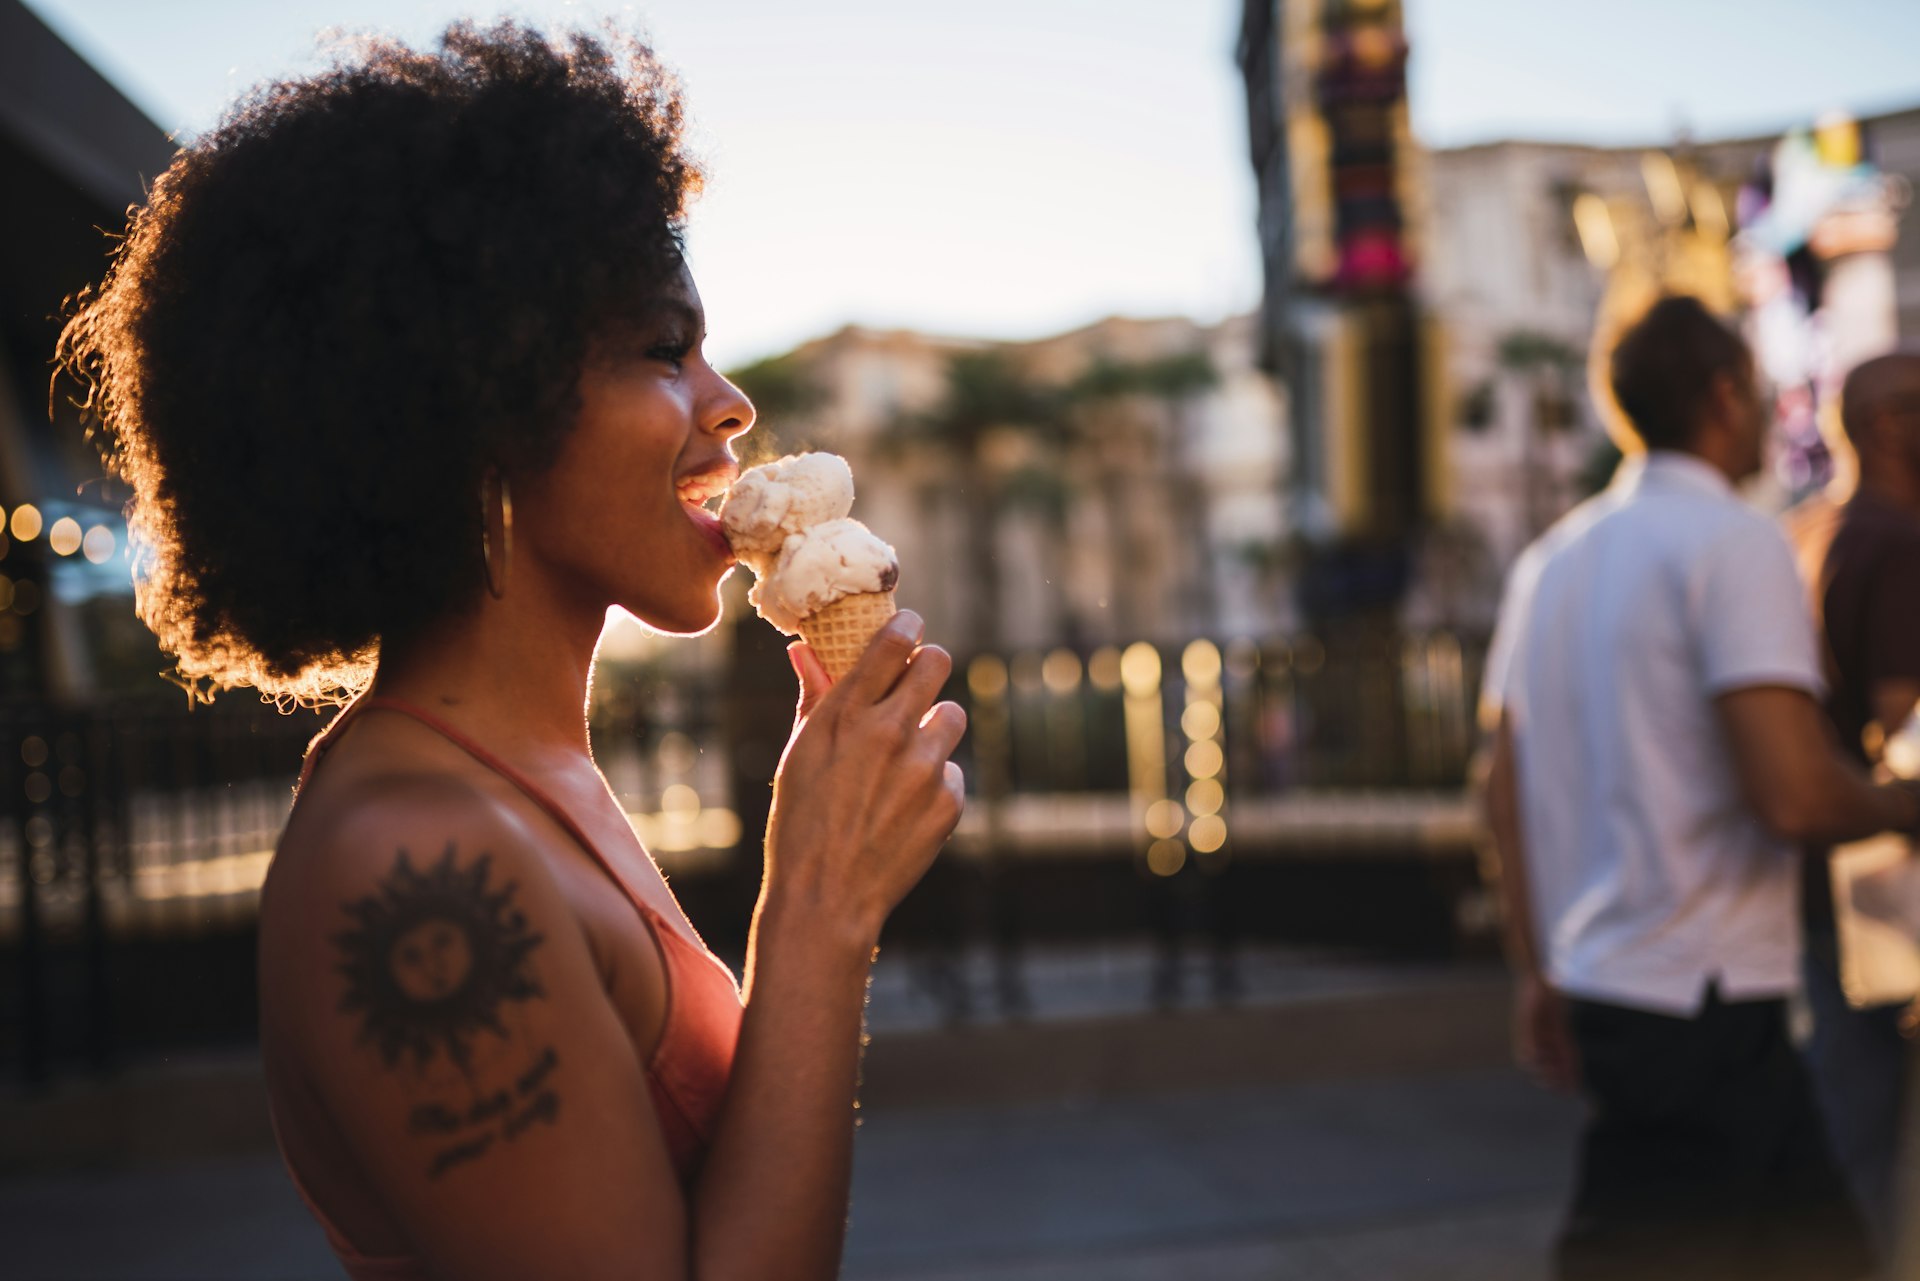 A woman eats ice cream while walking down a Vegas Street